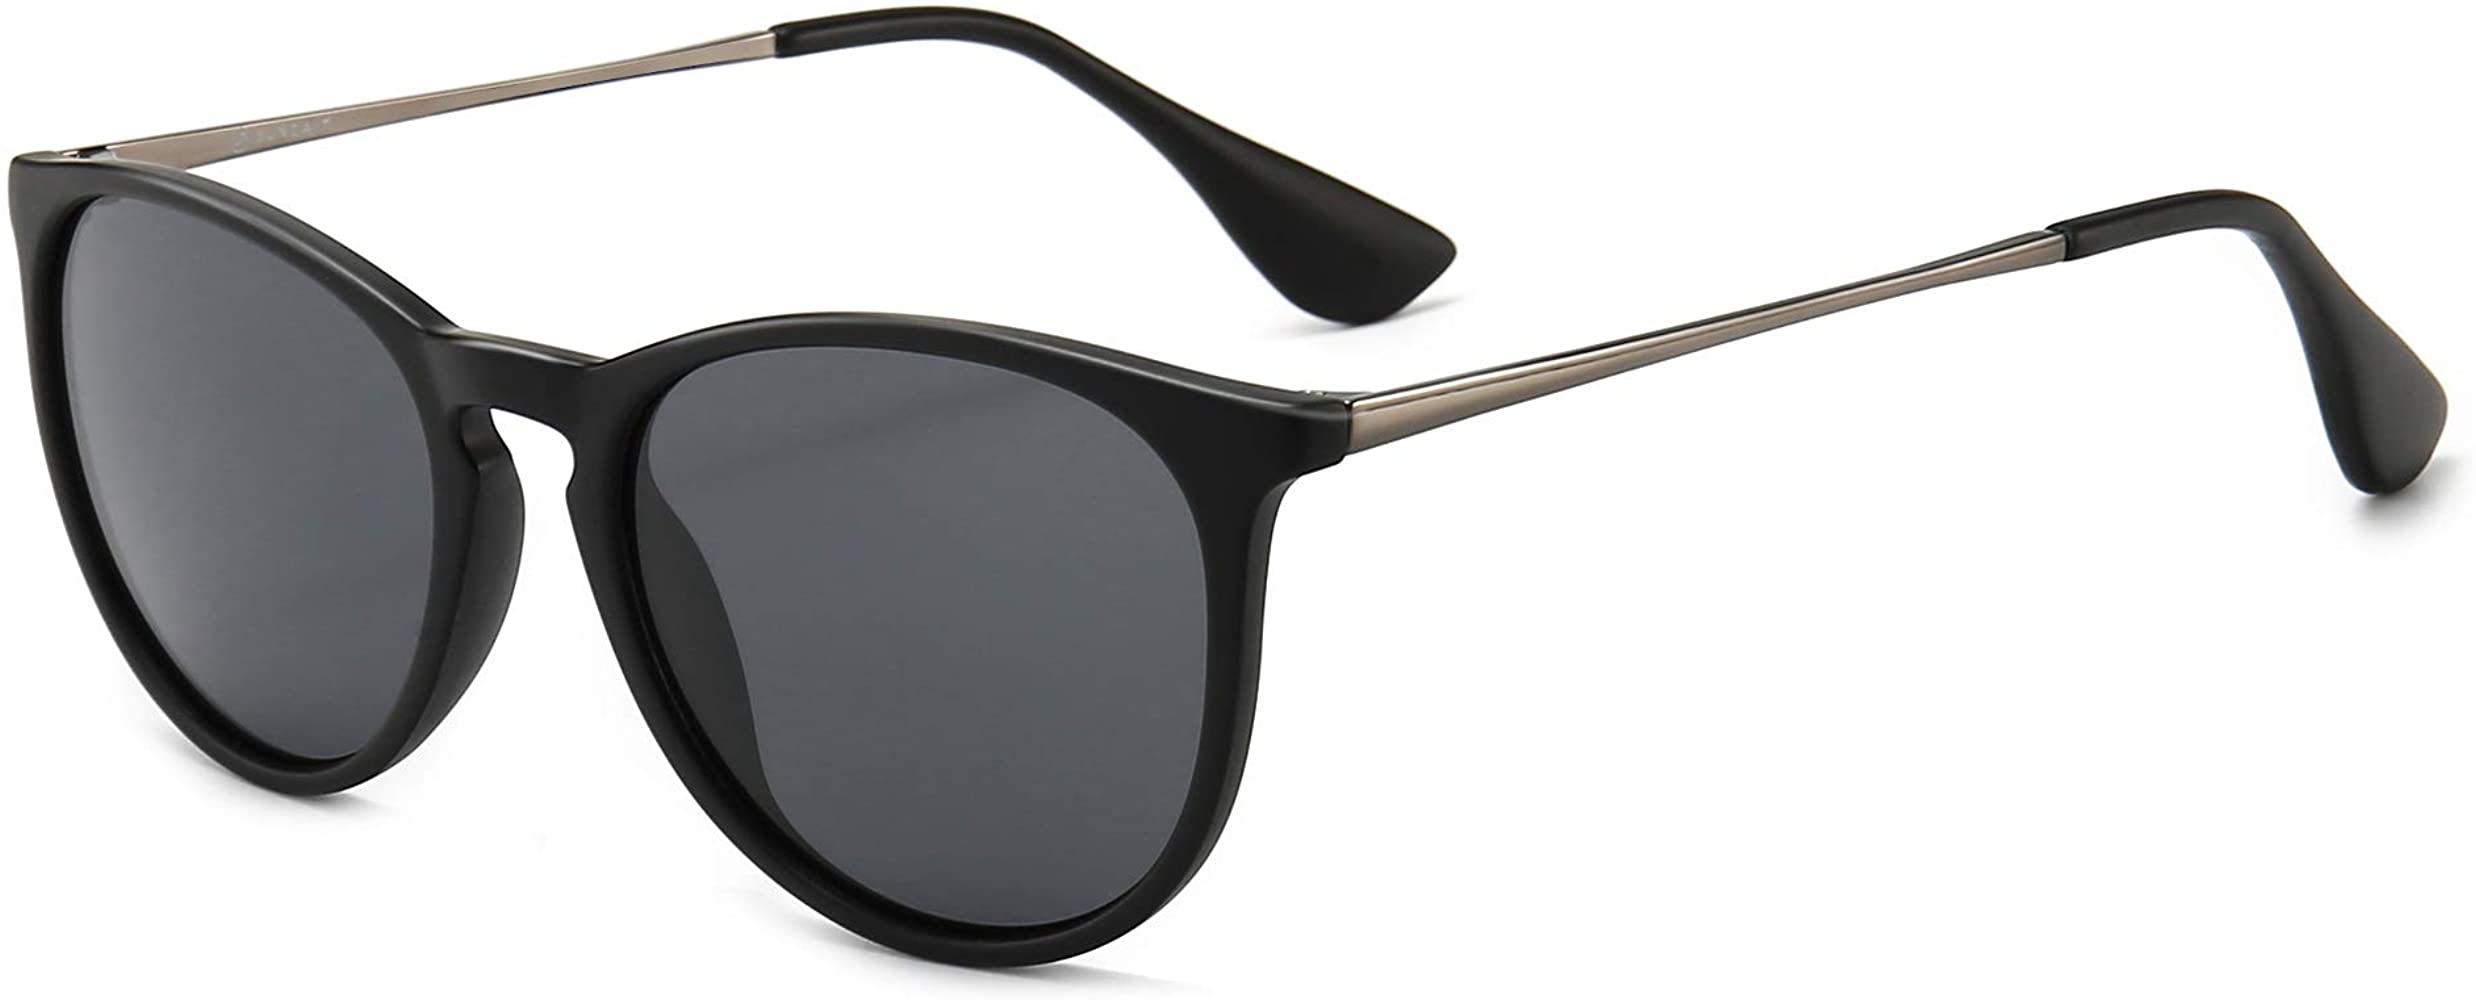 SUNGAIT-vintage-round-sunglasses